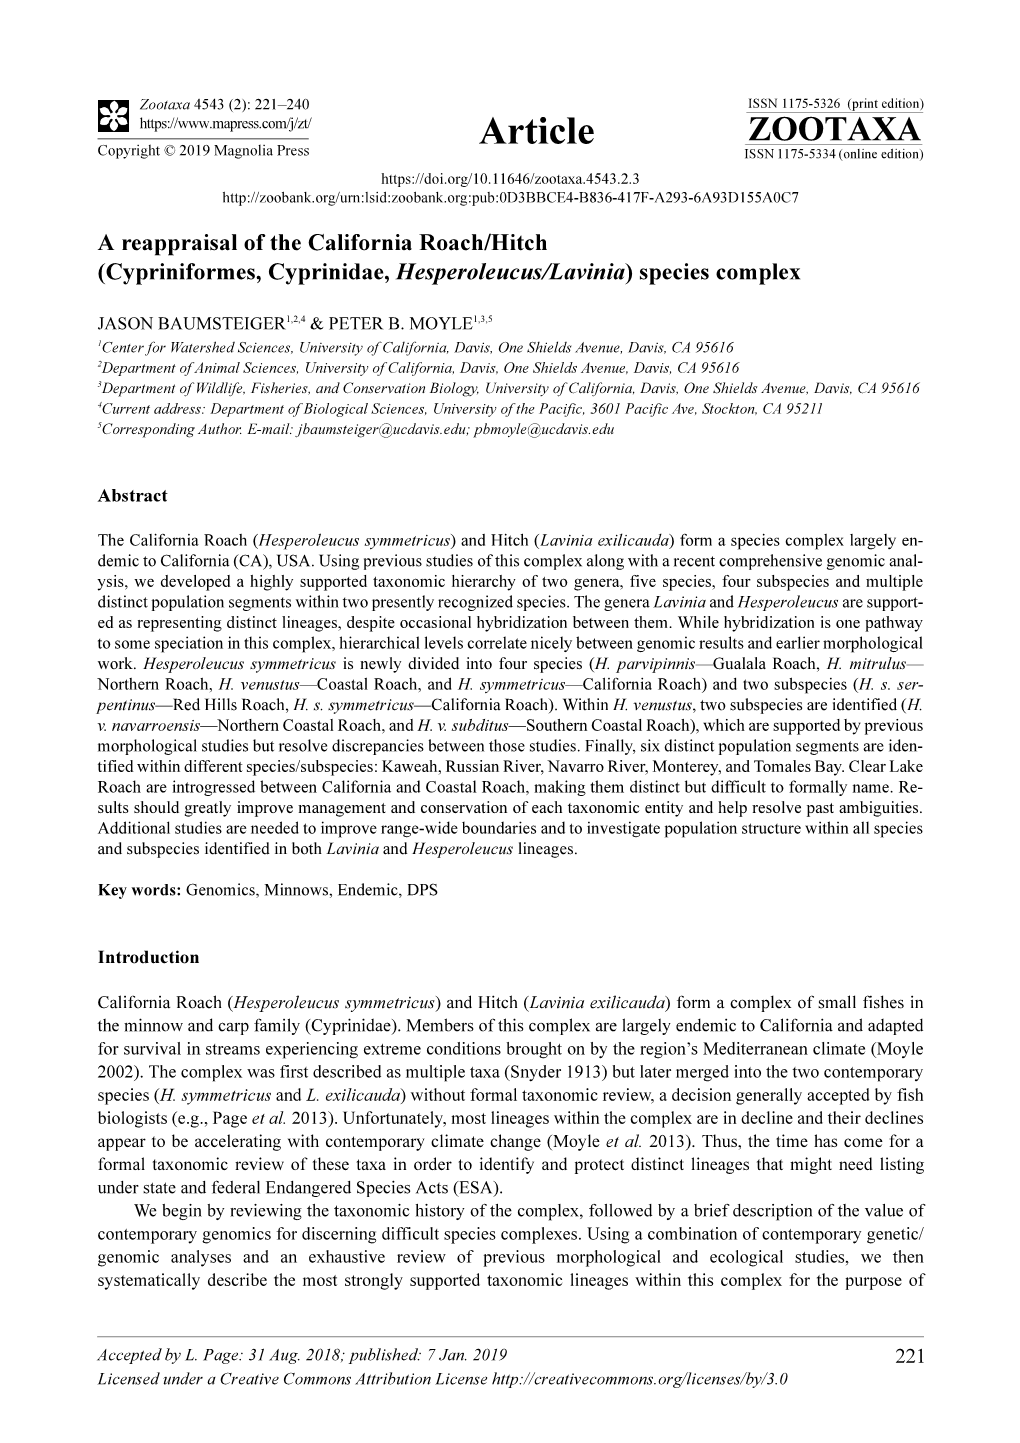 A Reappraisal of the California Roach/Hitch (Cypriniformes, Cyprinidae, Hesperoleucus/Lavinia) Species Complex